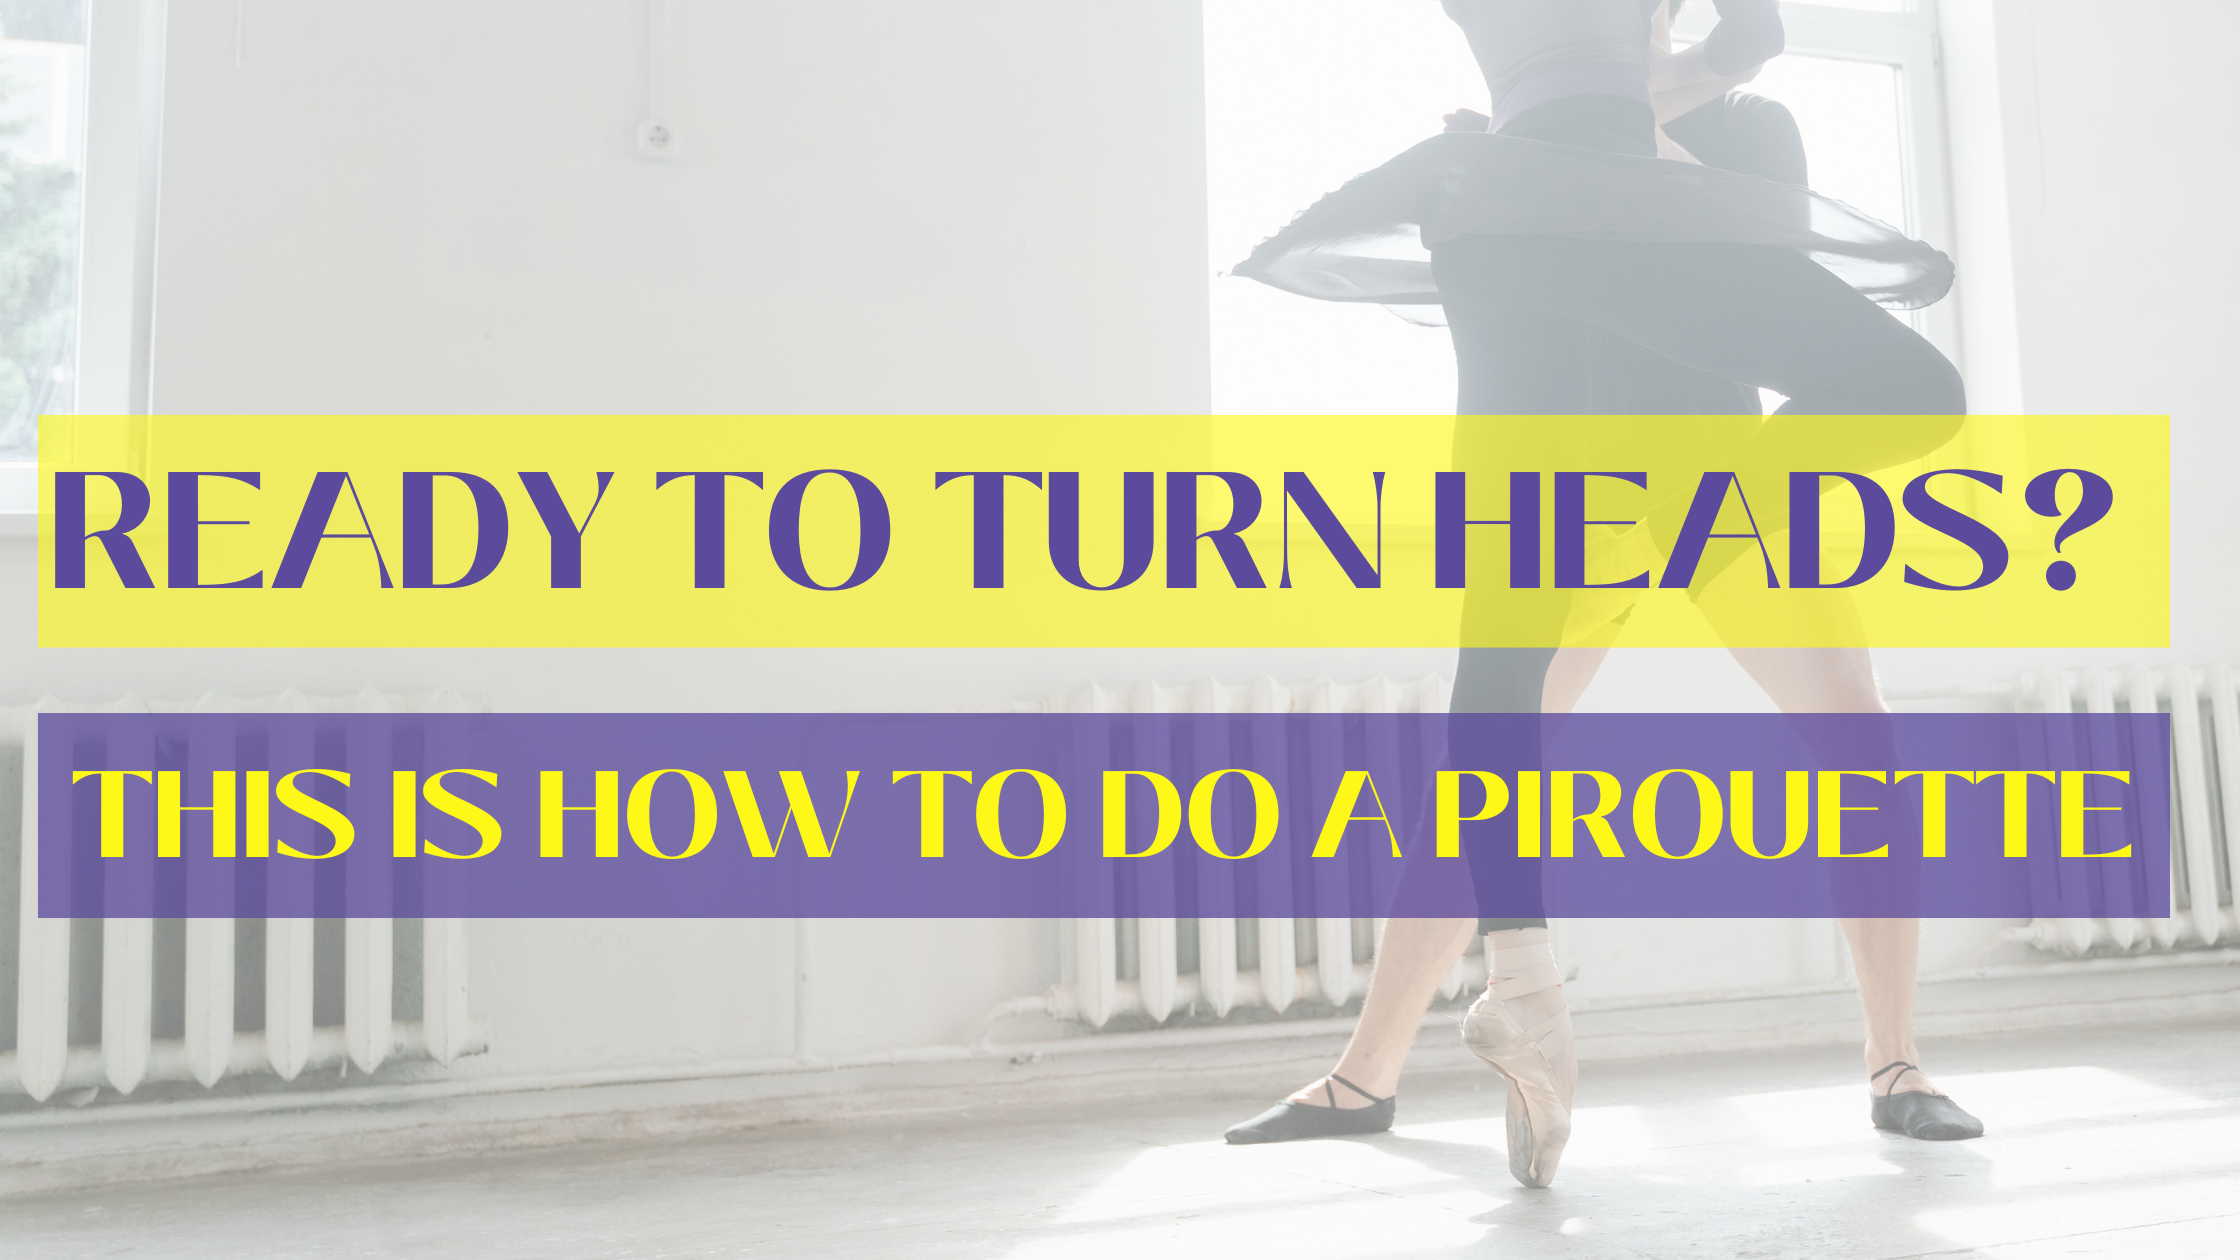 How to Do a Pirouette